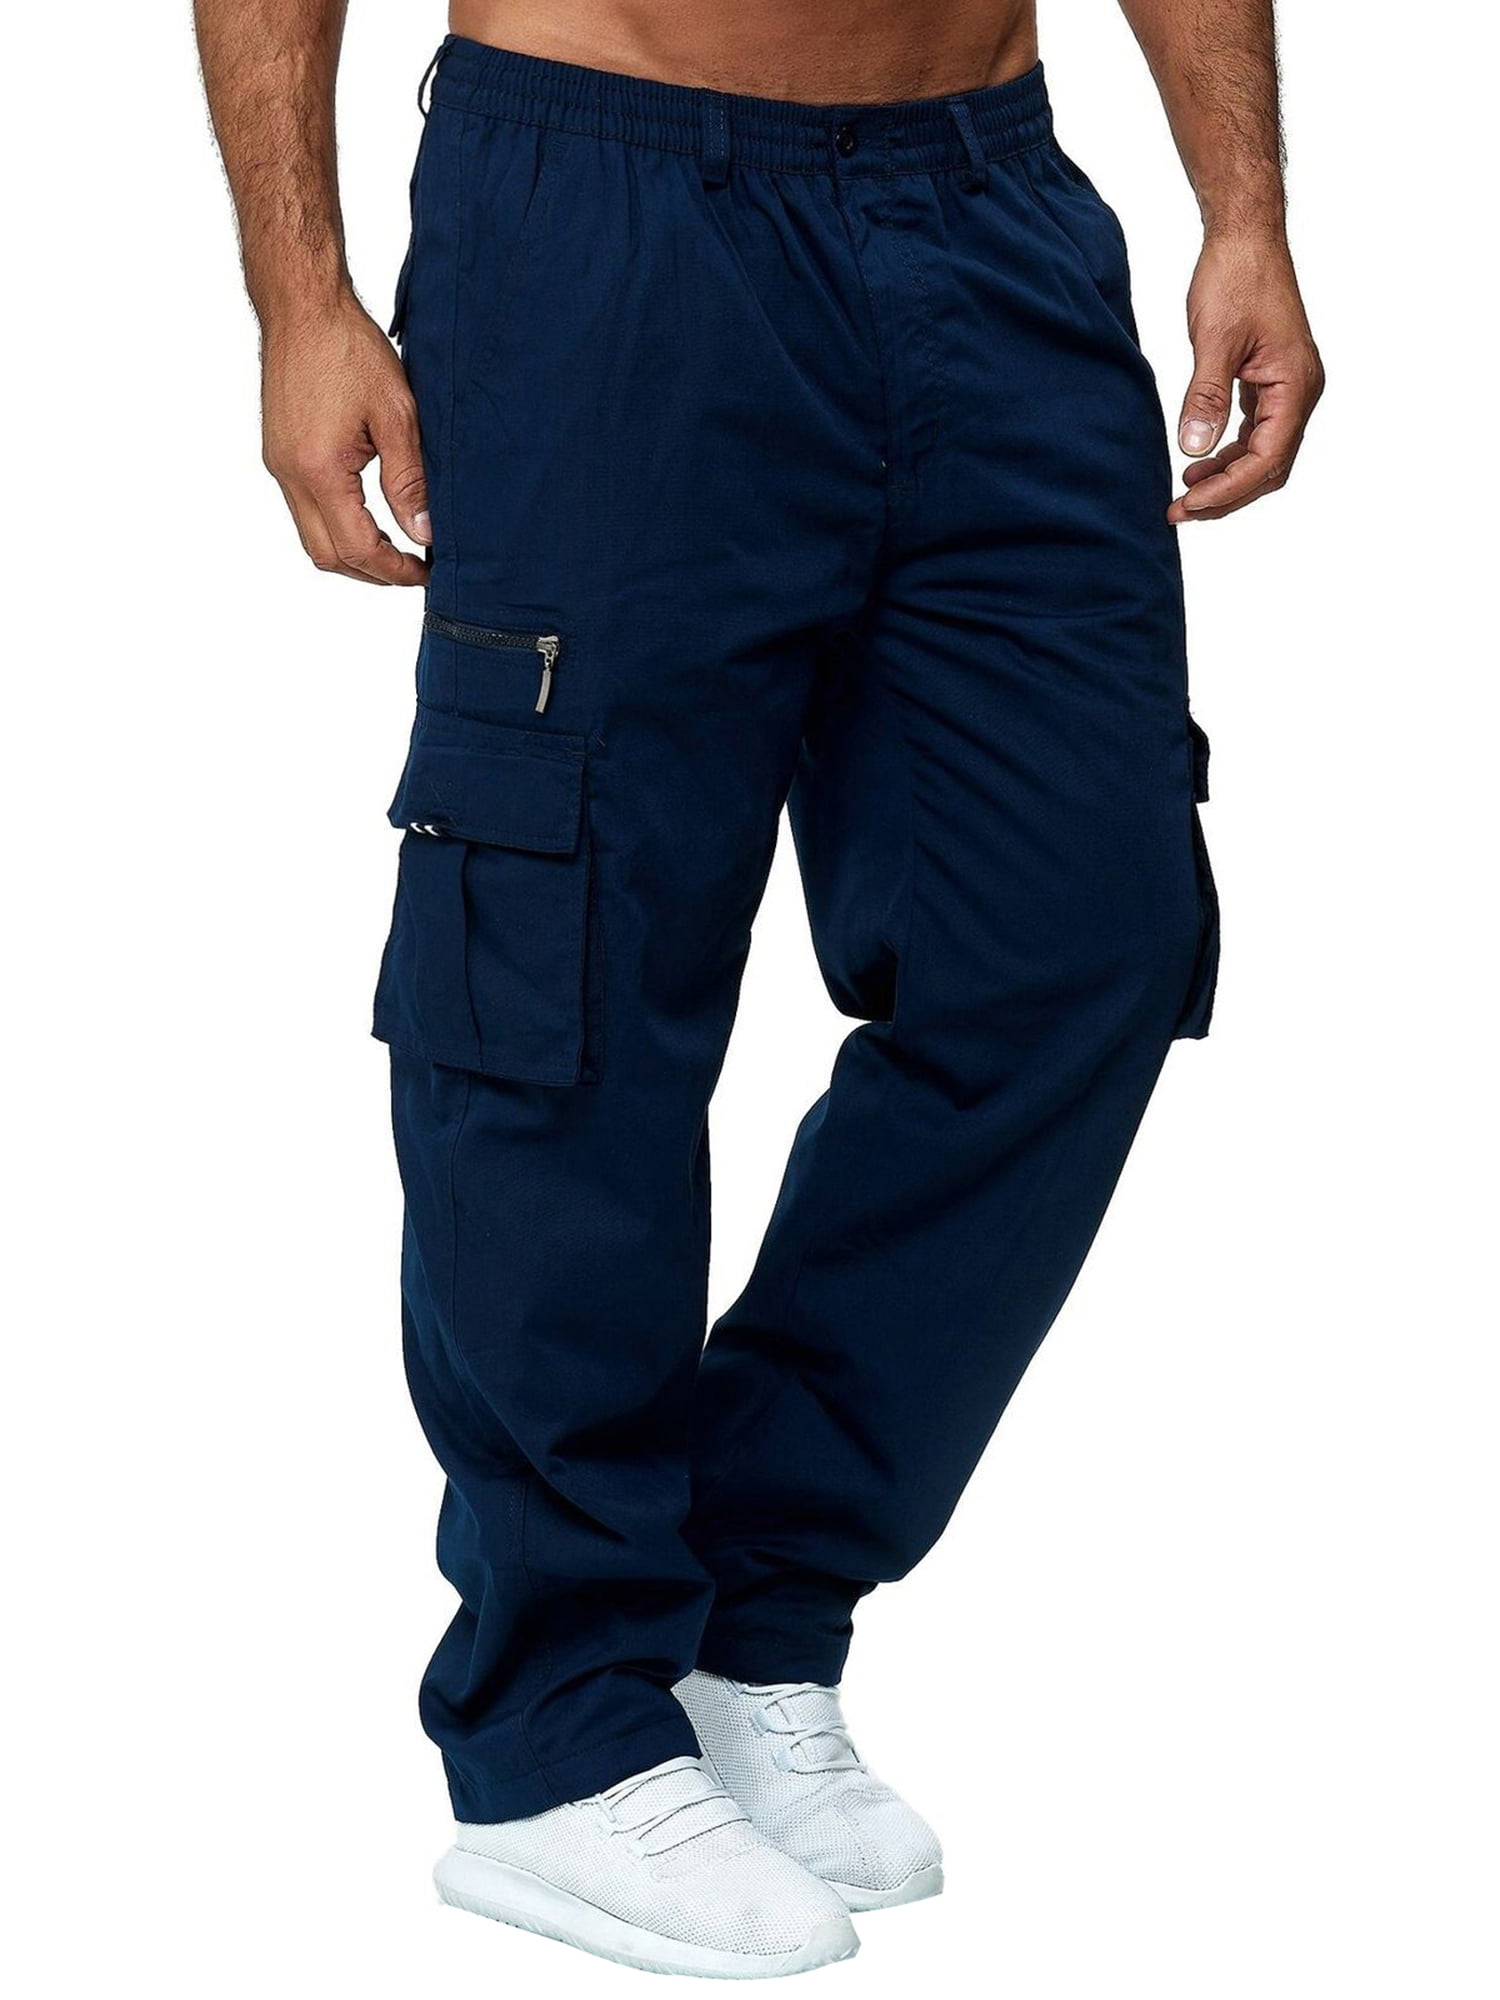 ASOS DESIGN oversized cargo trouser with multi pocket in khaki